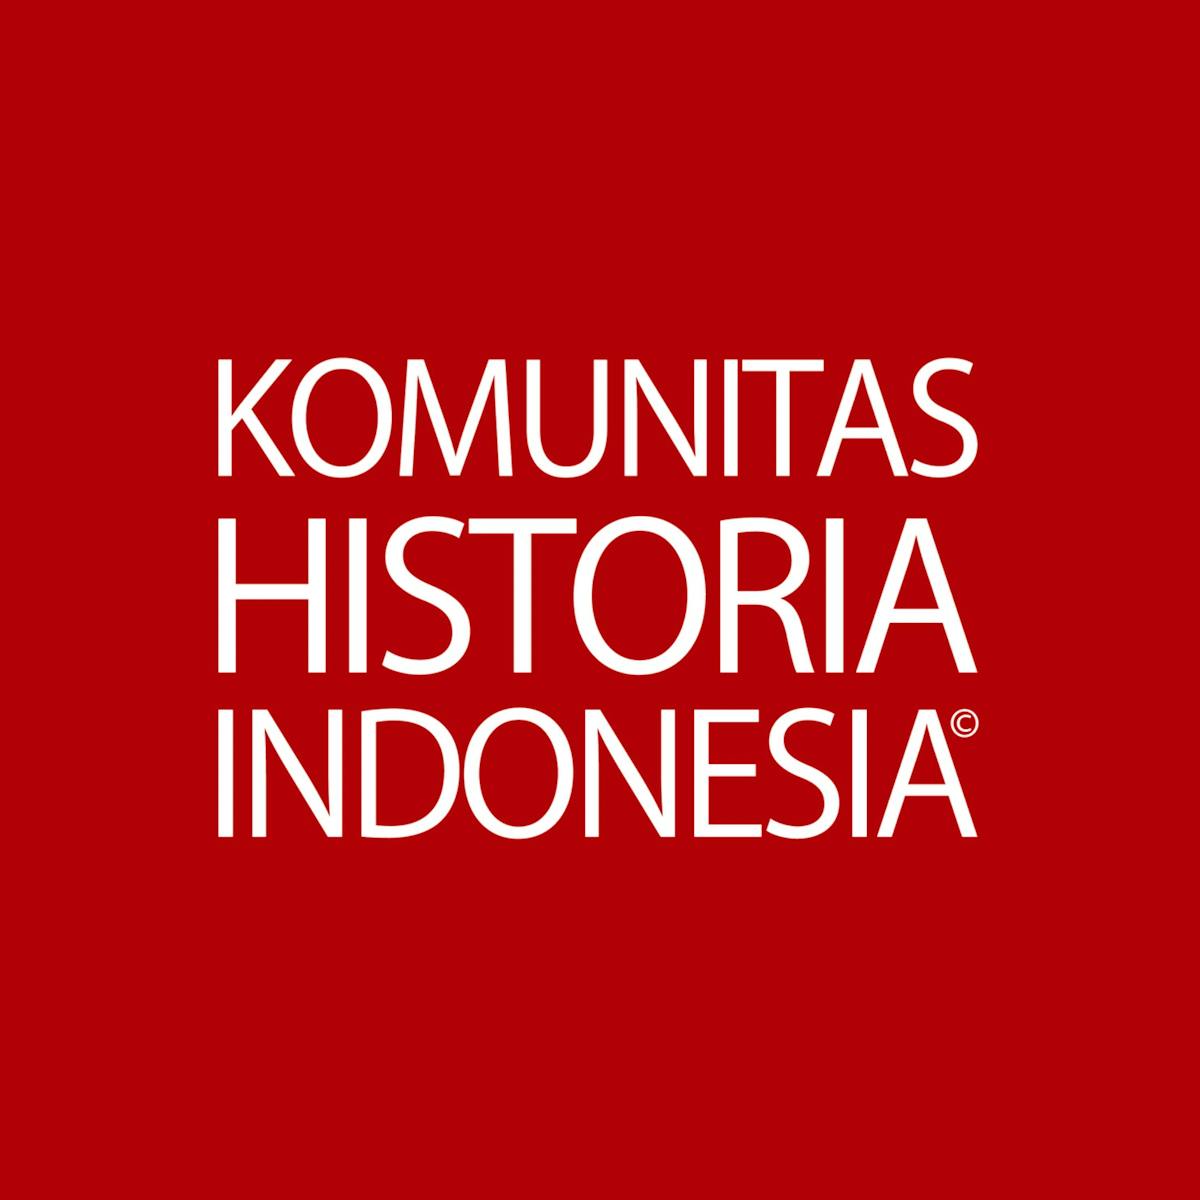 Komunitas Historia Indonesia logo